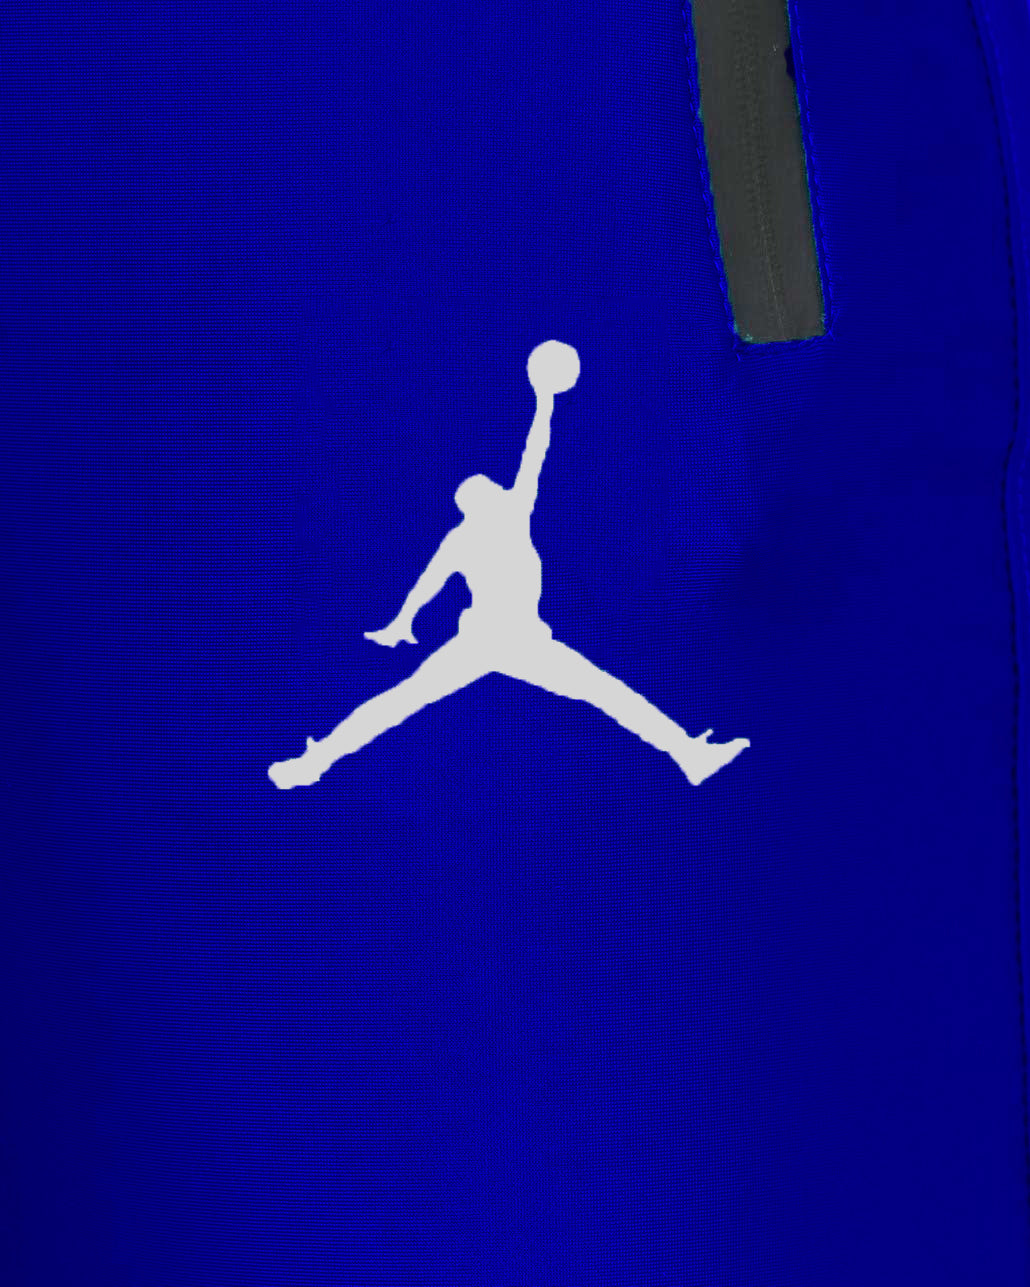 Men Casual Nike Jordan Super Stretchable Imported Trouser-Royal Blue